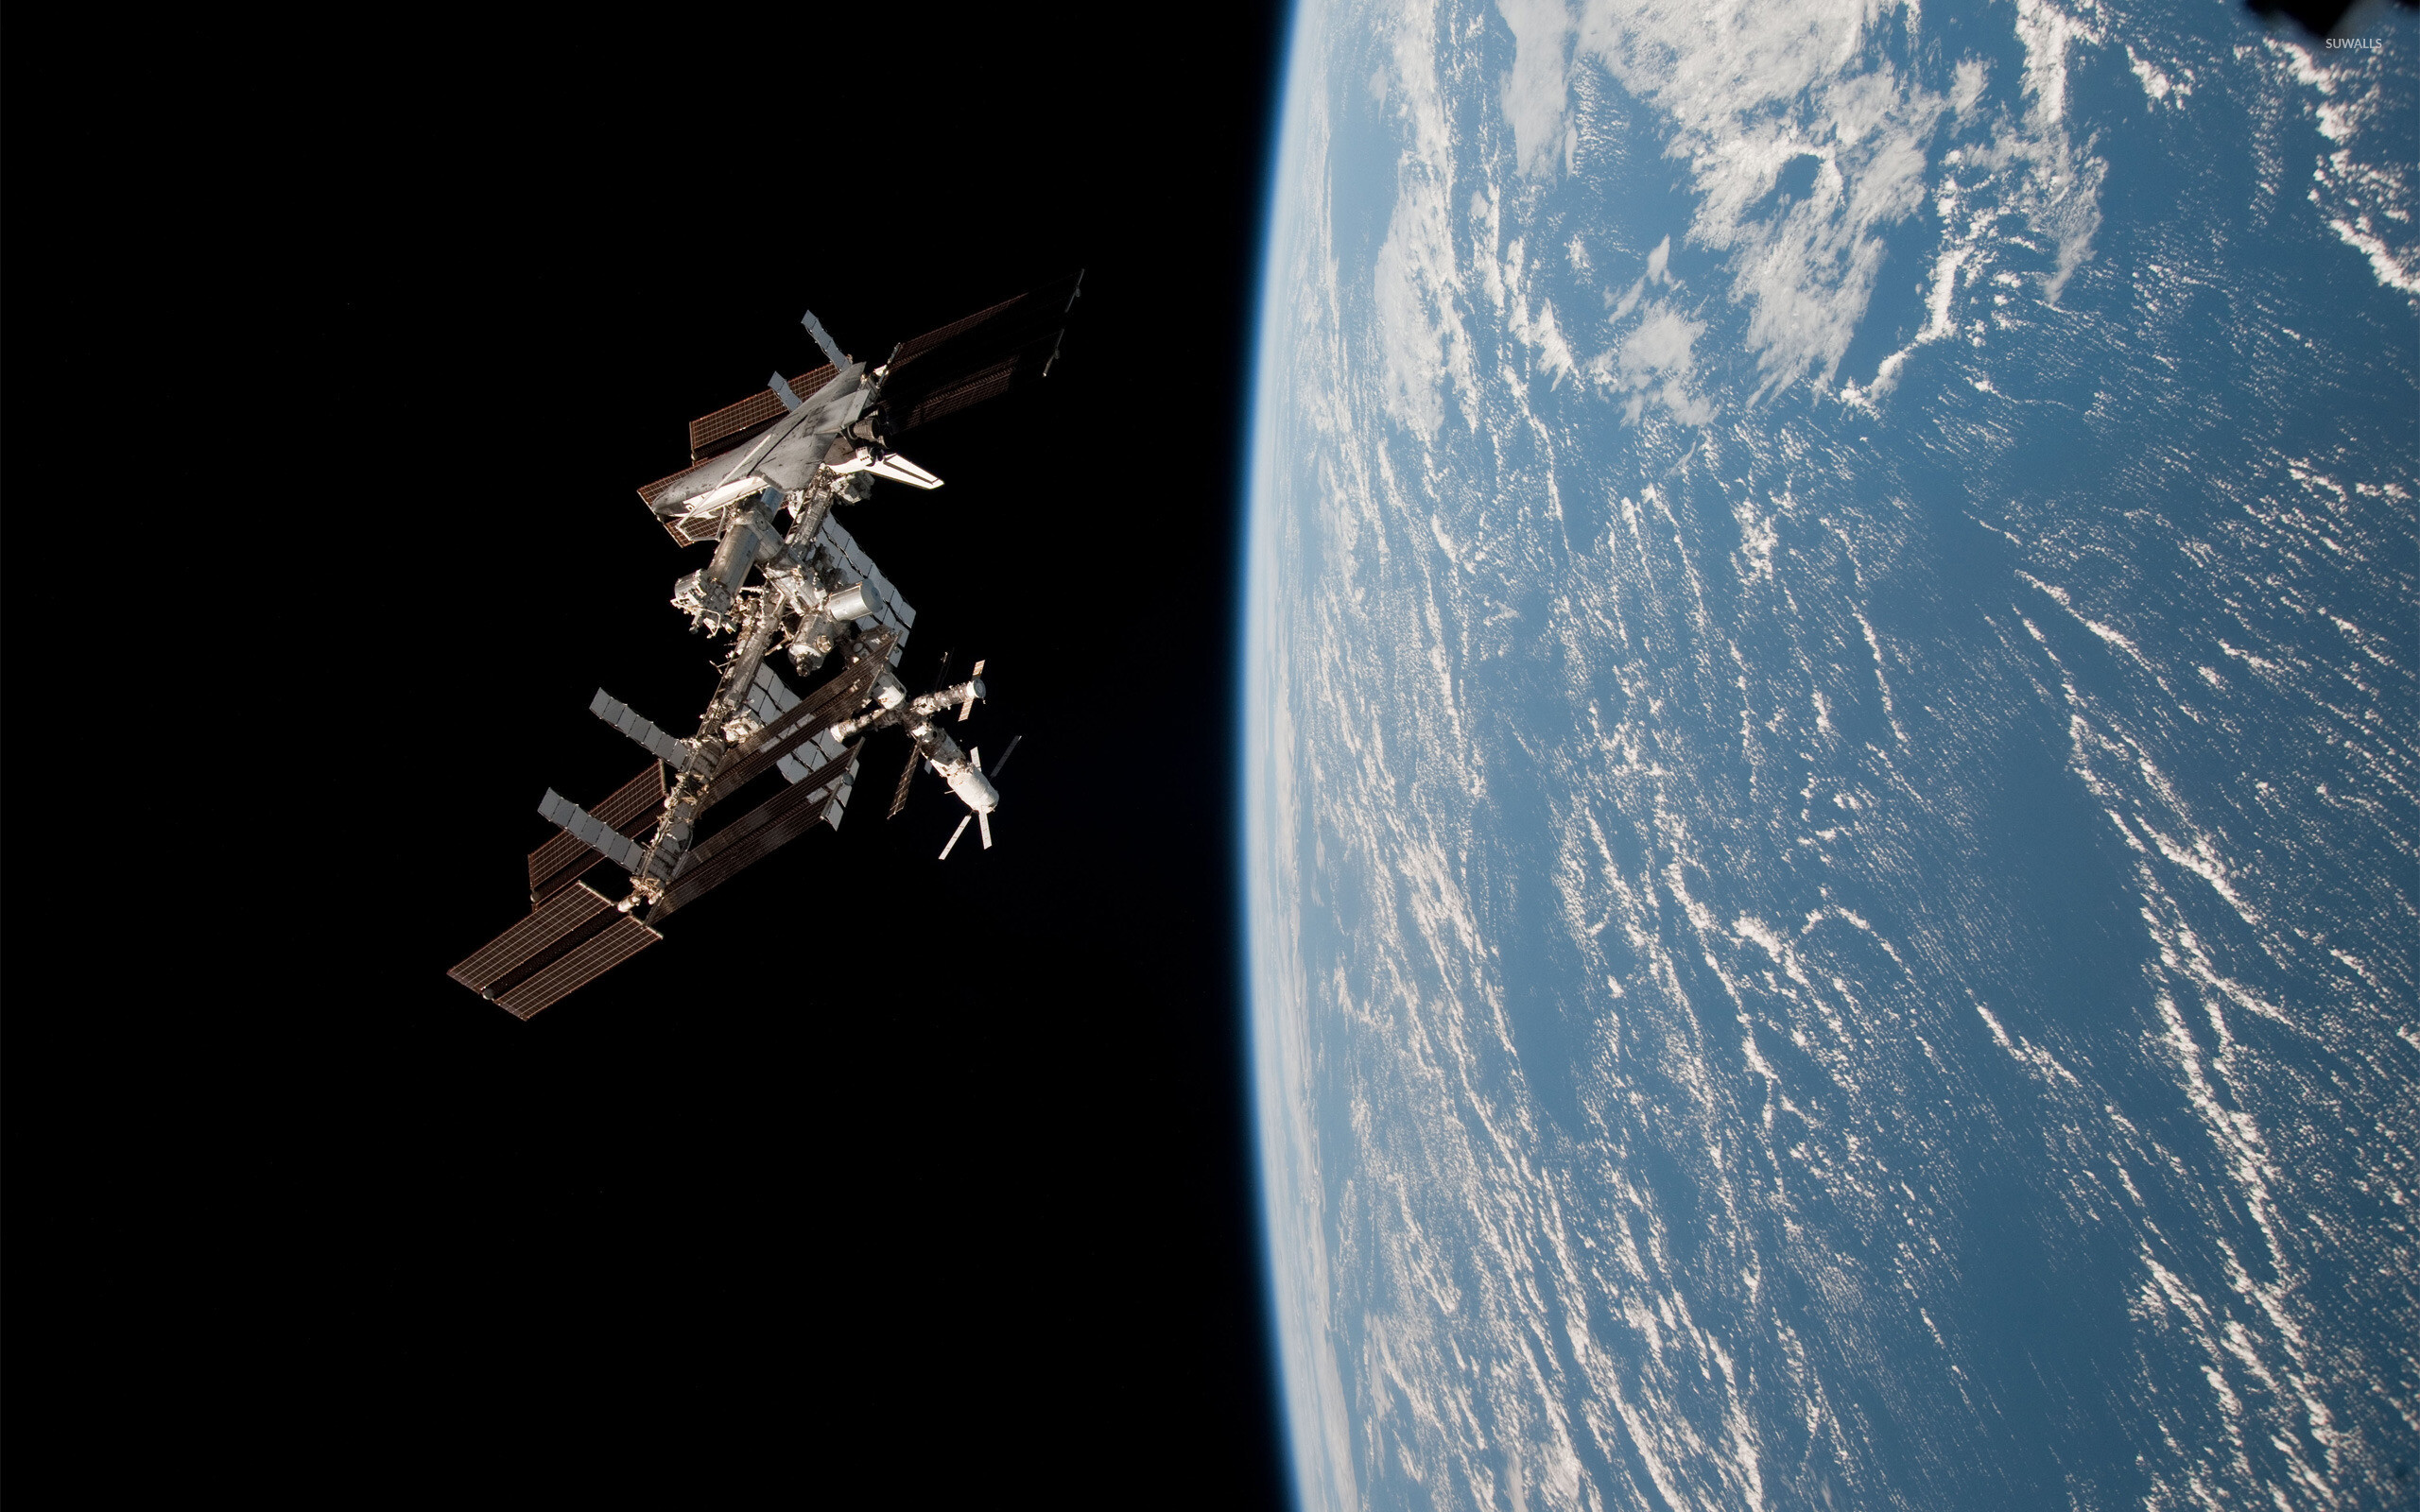 International Space Station: The project involves five space agencies: NASA, Roscosmos, JAXA, ESA, and CSA. 2560x1600 HD Wallpaper.